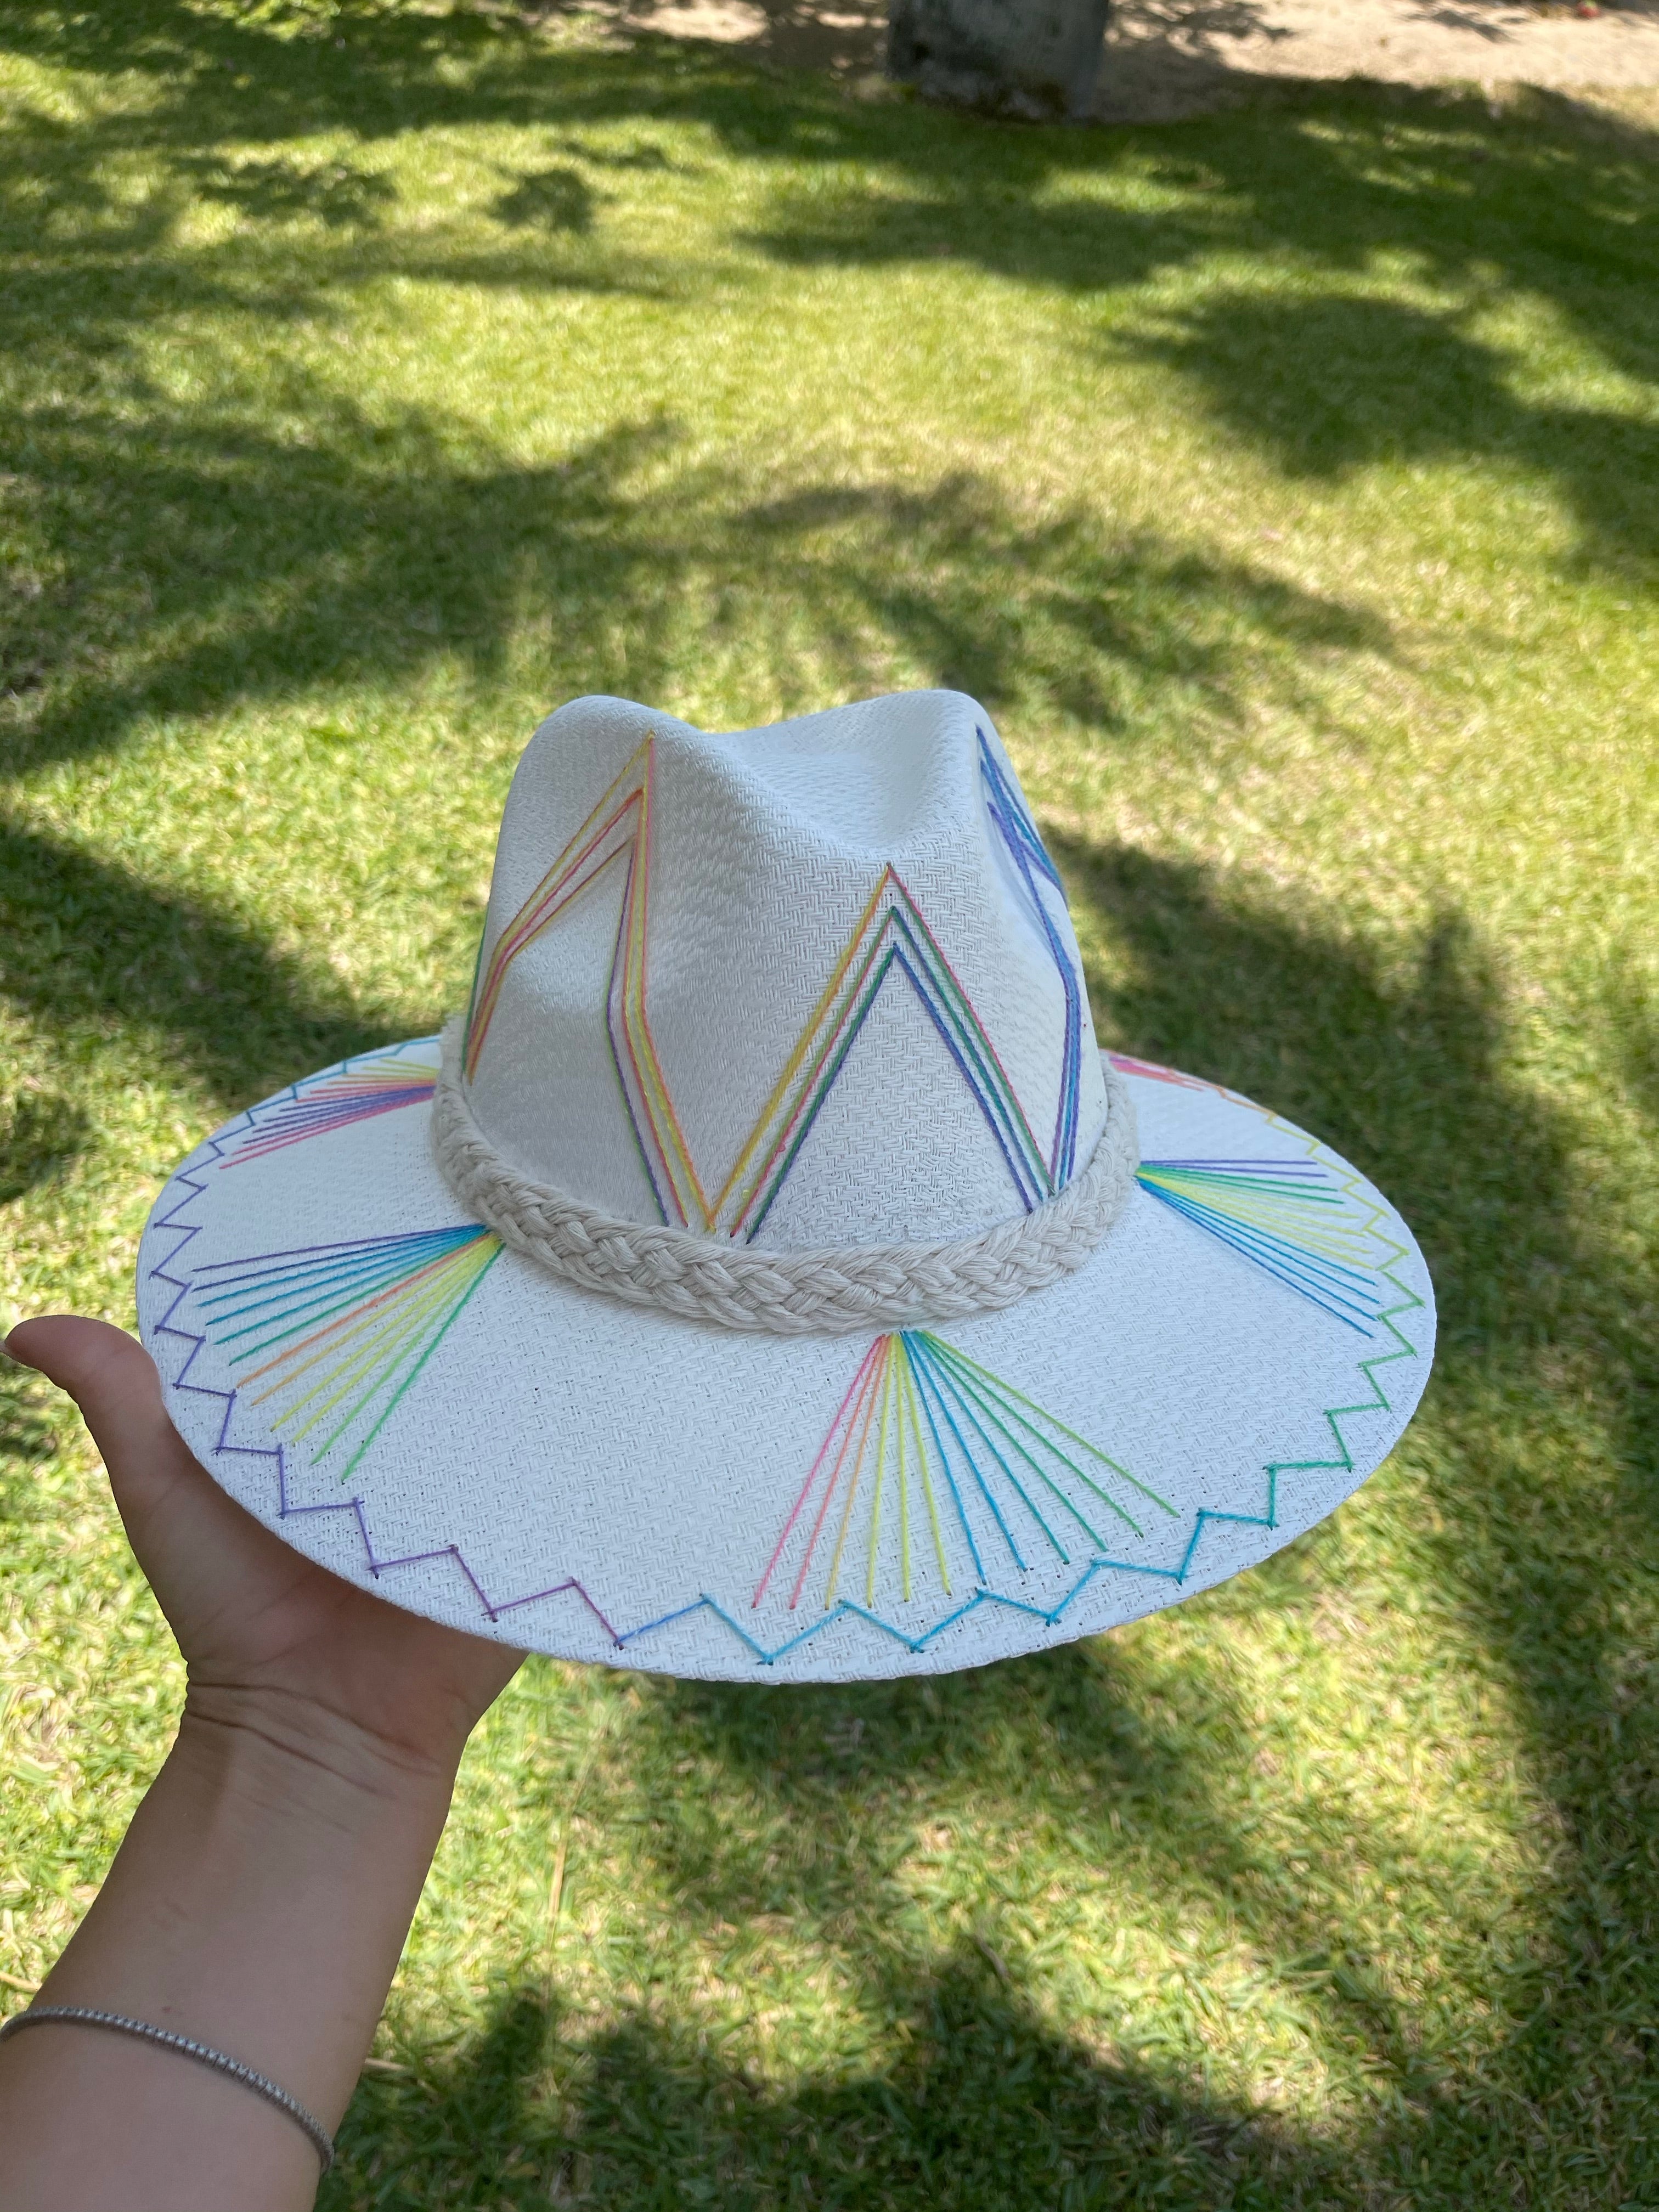 Exclusive Rainbow Hat by Corazon Playero